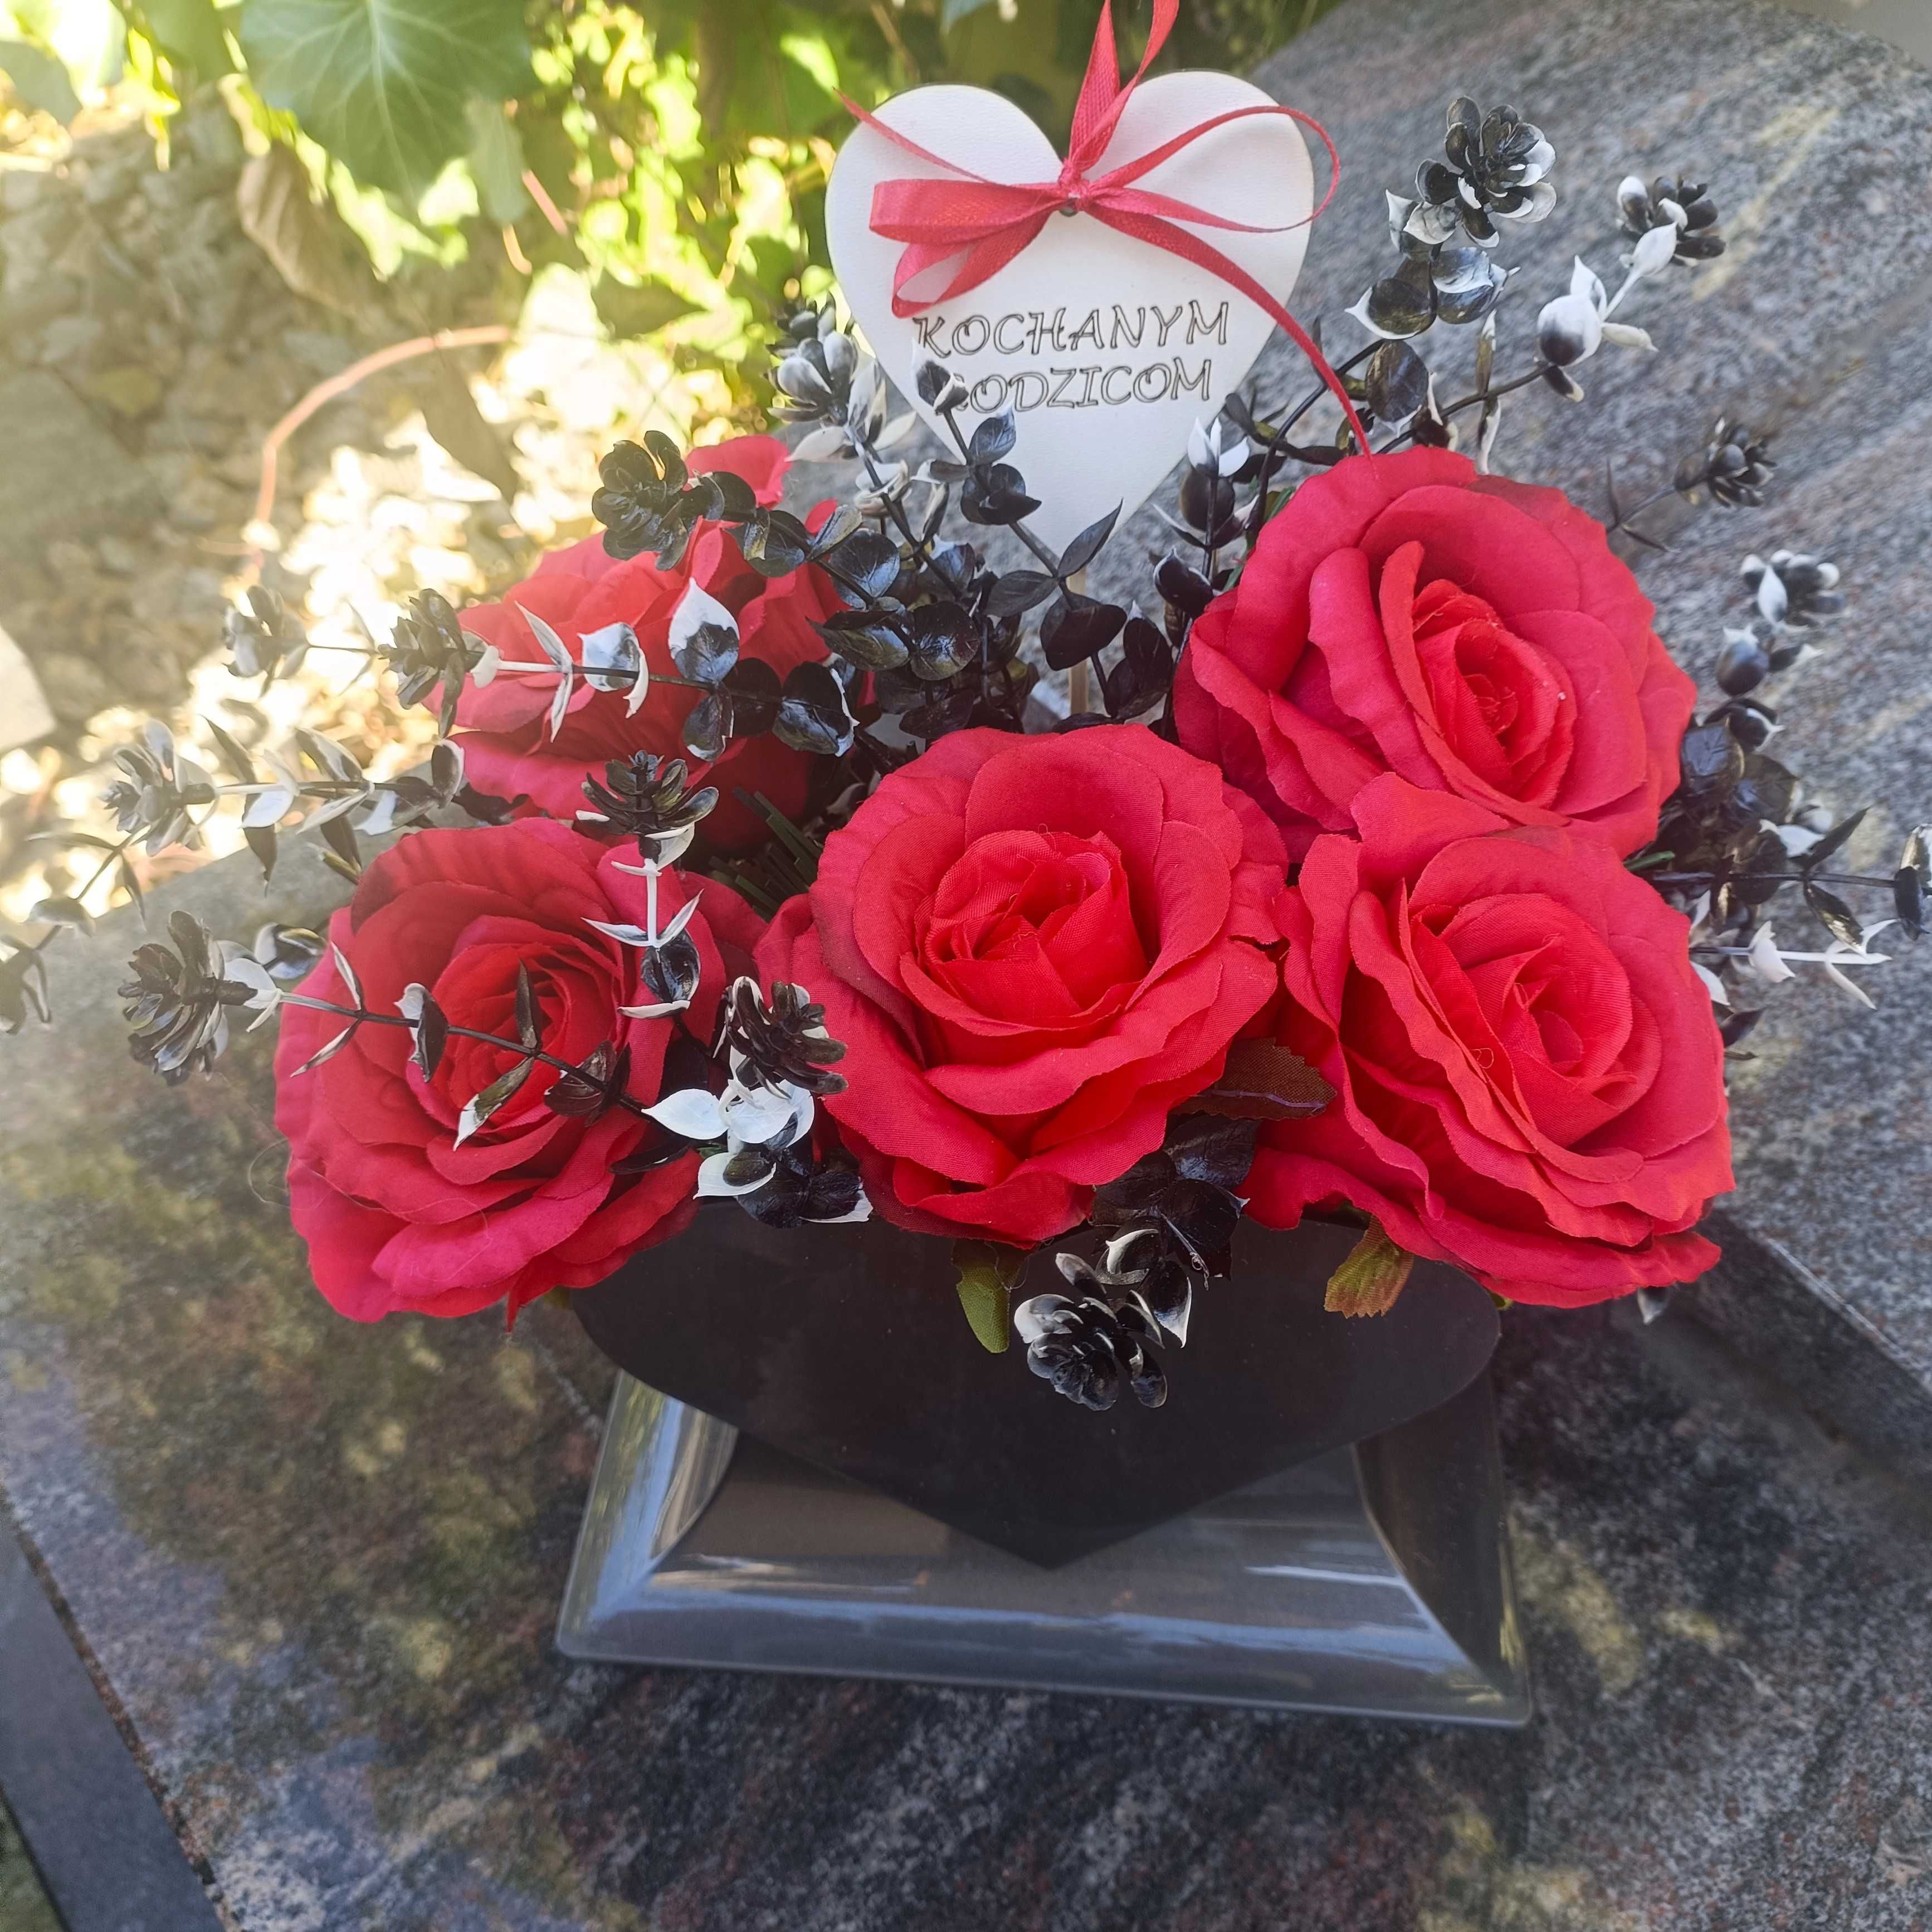 Wiązanka na grób czerwone róże serce na pomnik kolumbarium